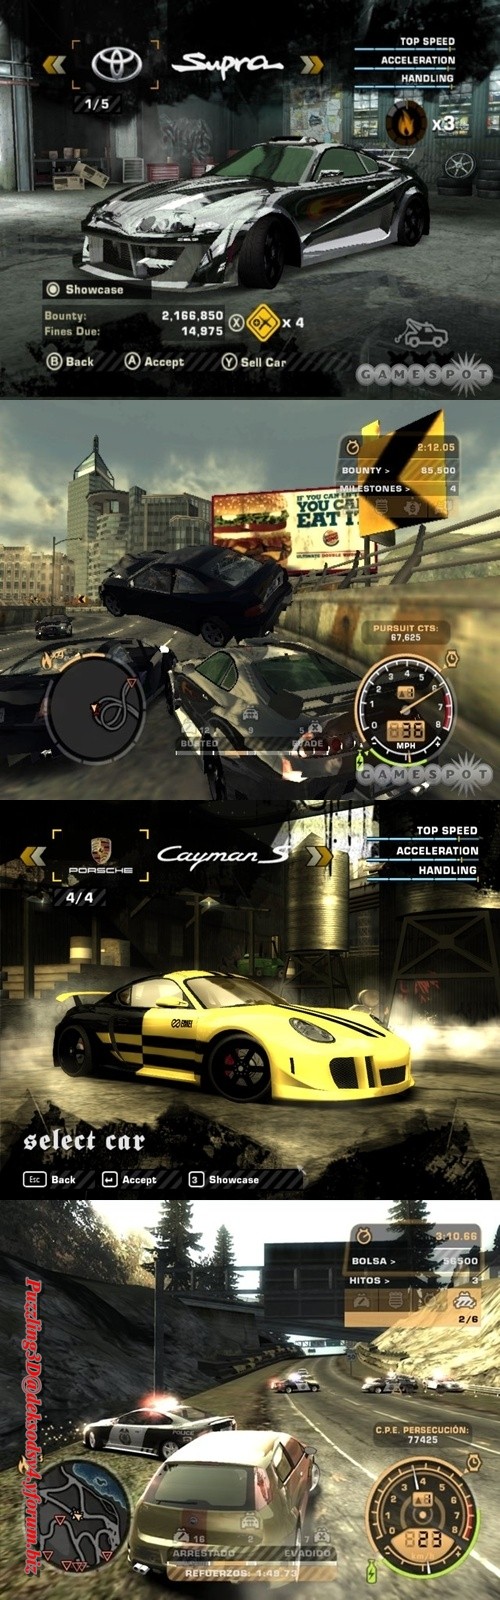 [PC] Need For Speed : Most Wanted 2005 Thai แถมภาค 2012 [ฺBitTorent + Repack + Update + Patch ภาษาไทย + Crack]	แถมการเพิ่มรถ และอื่นๆ รายละเอียดด้านใน... Need-f10